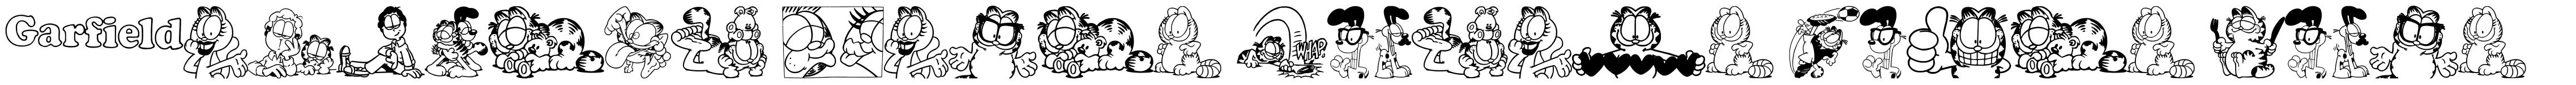 Garfield Hates Mondays Loves Fonts schriftart